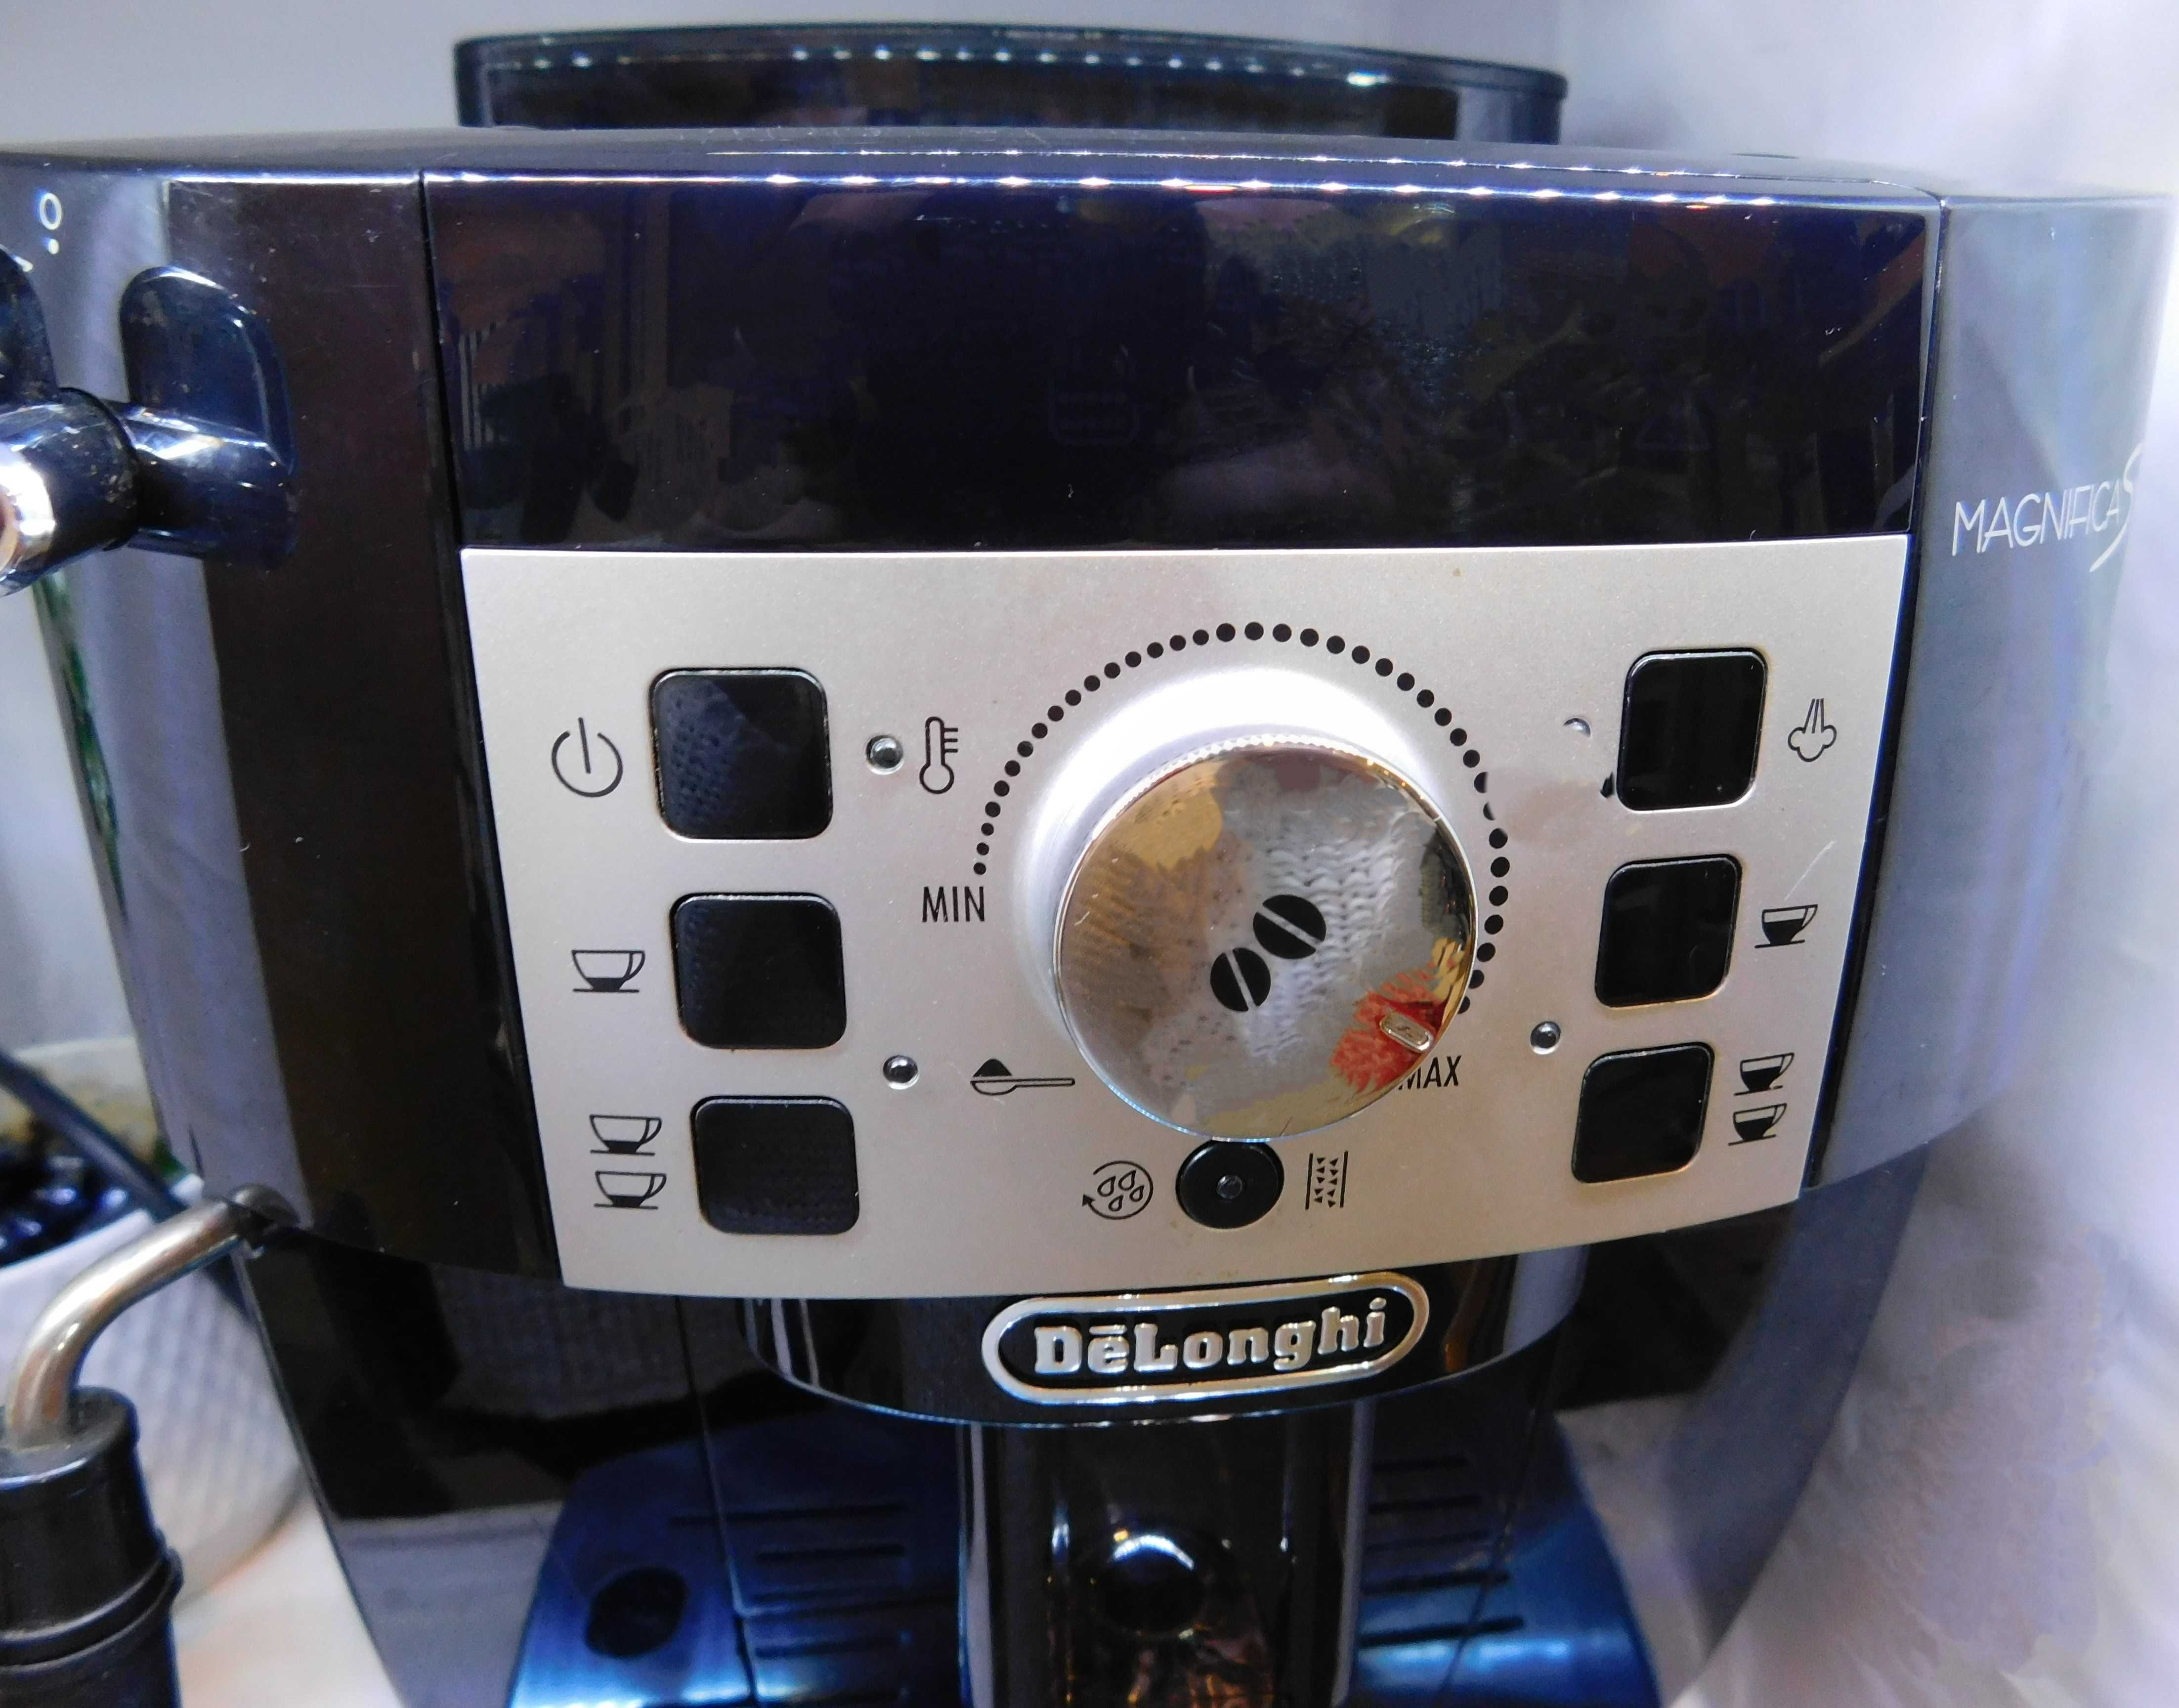 Espressor cafea DeLonghi Magnifica S ECAM 22.112.B / GARANTIE 12 LUNI